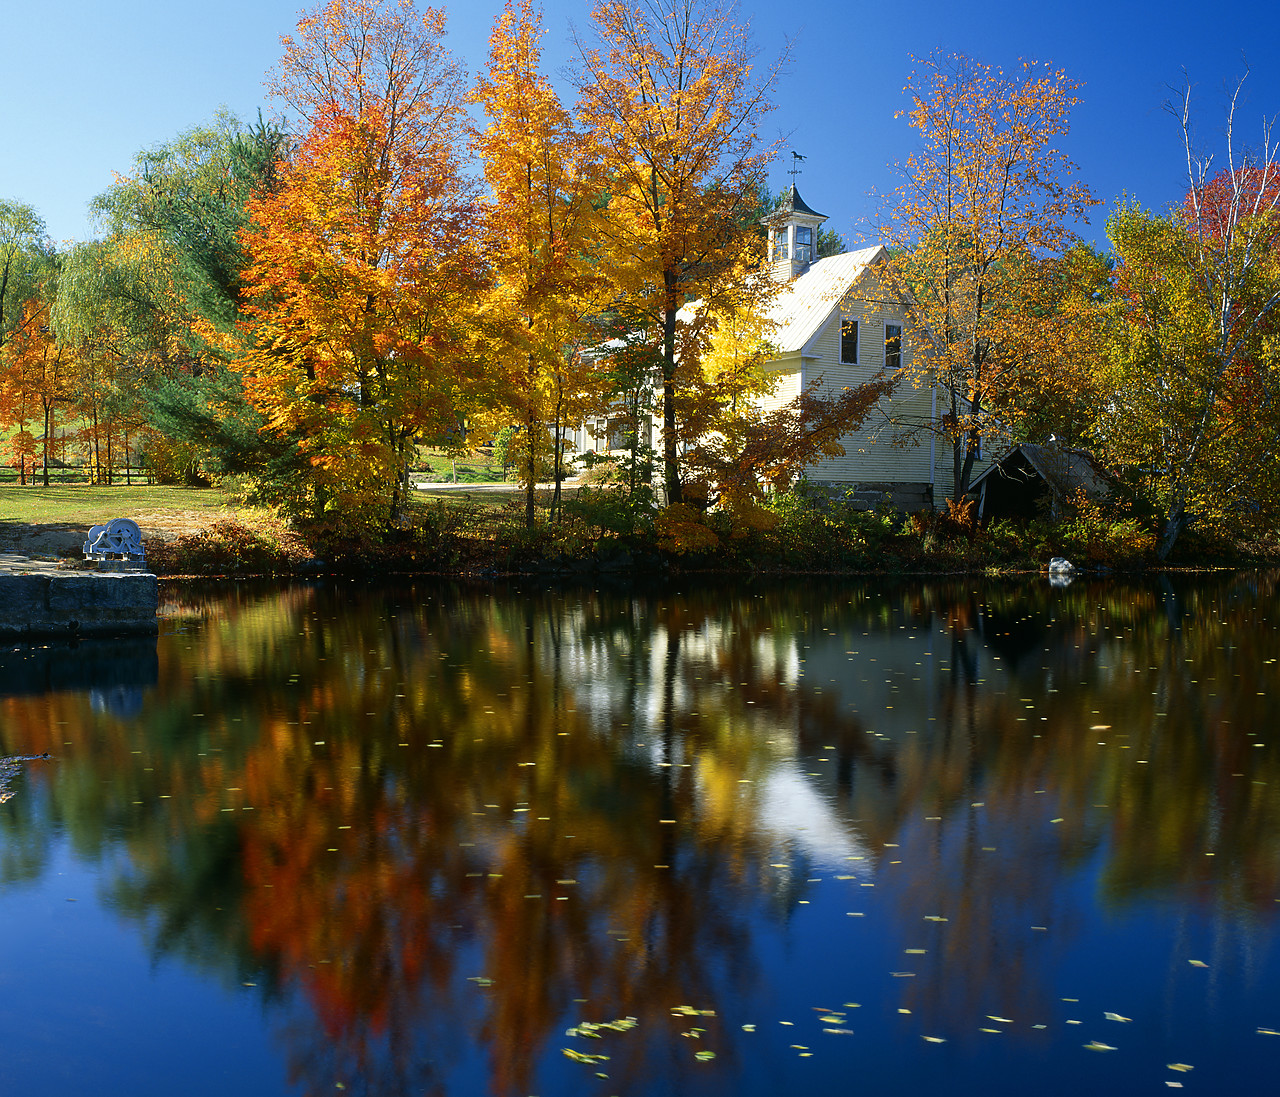 #945002-1 - Chocorua River Reflections, New Hampshire, USA